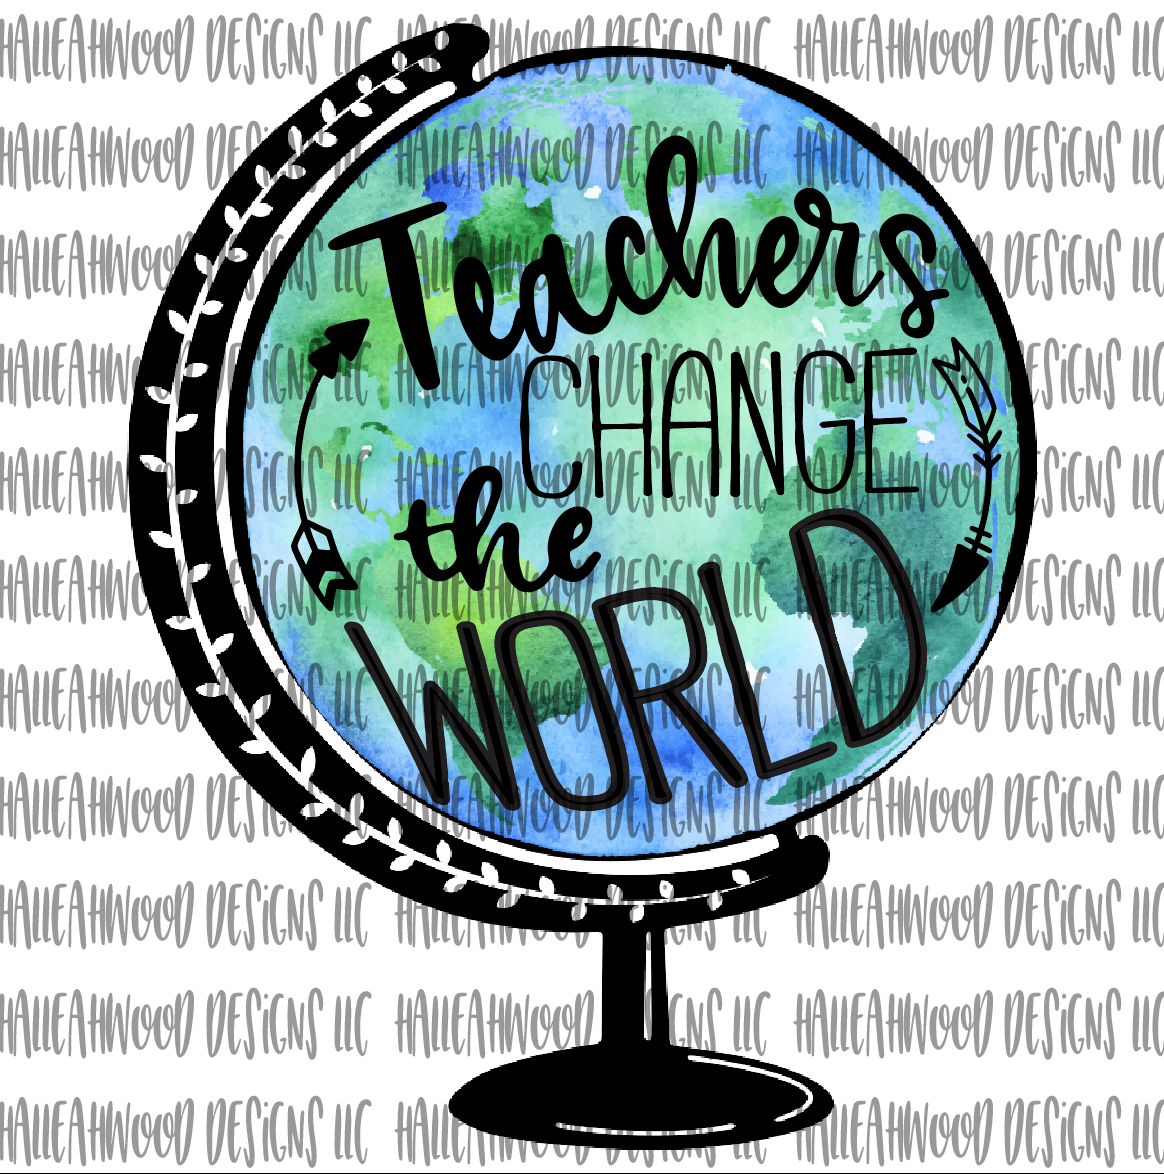 teachers-change-the-world-halleahwood